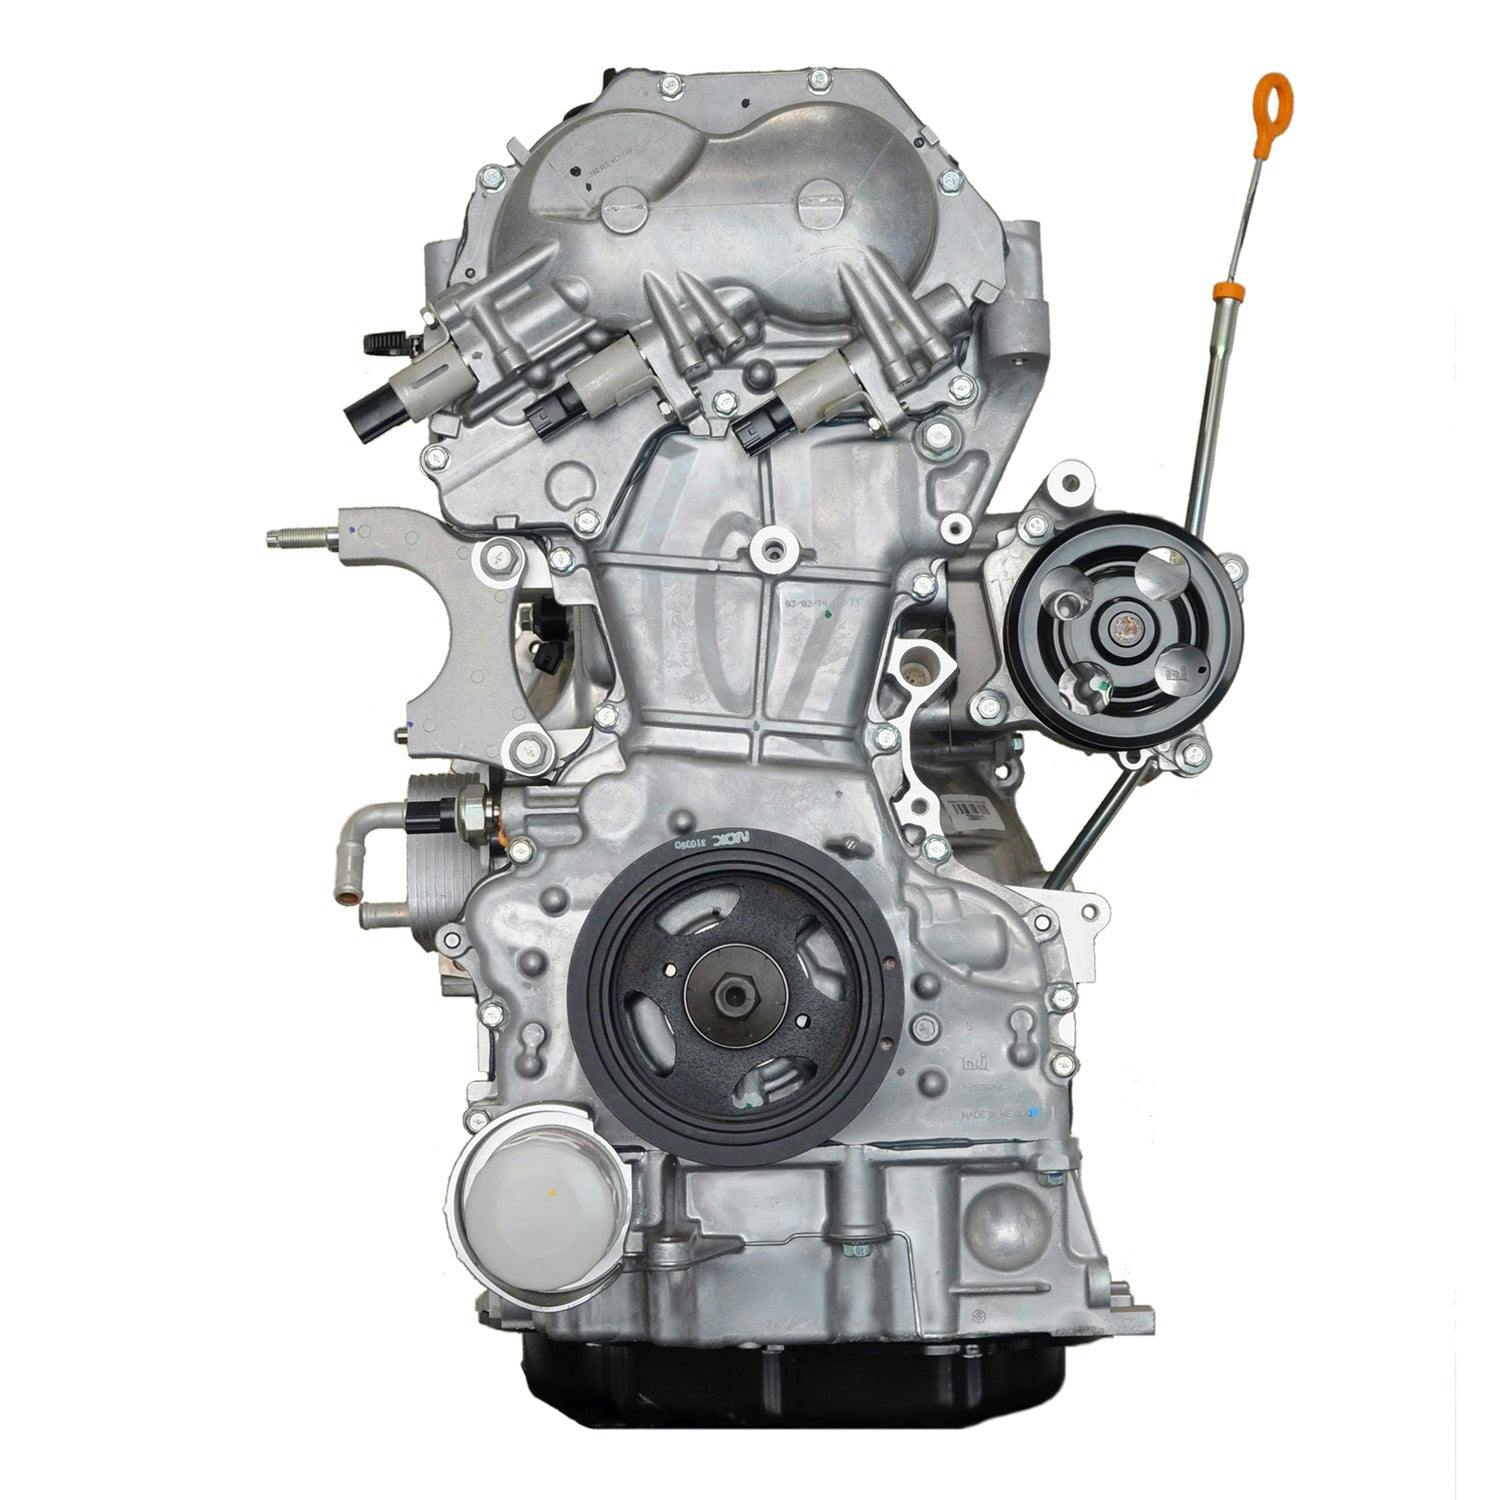 2.5L Inline-4 Engine for 2014-2017 Infiniti QX60/Nissan Murano, Pathfinder